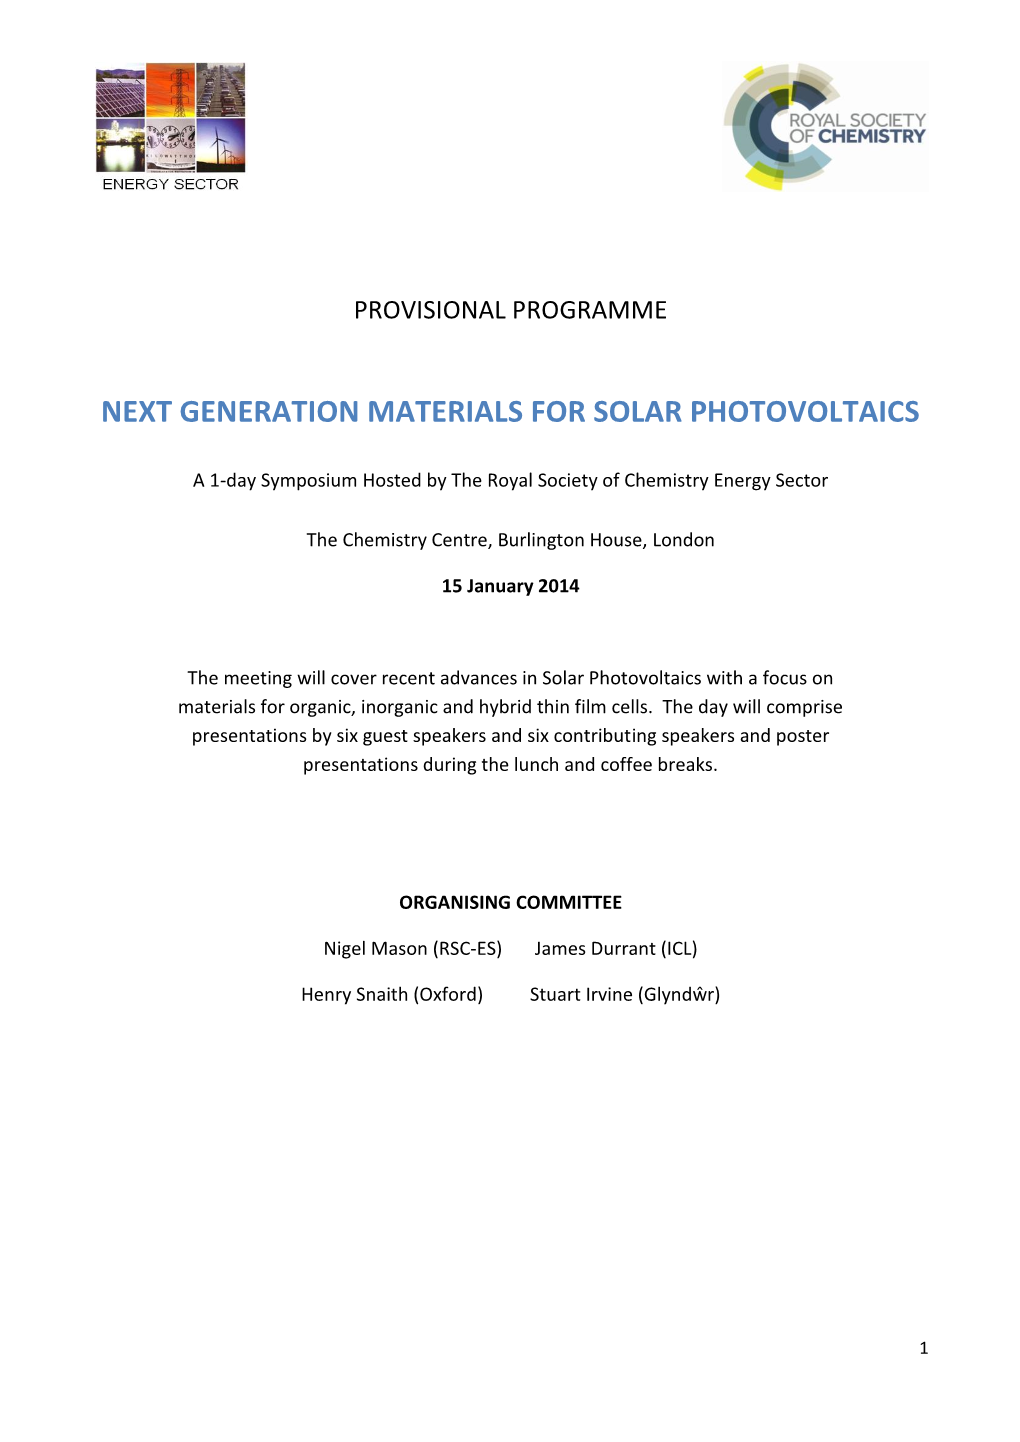 Next Generation Materials for Solar Photovoltaics